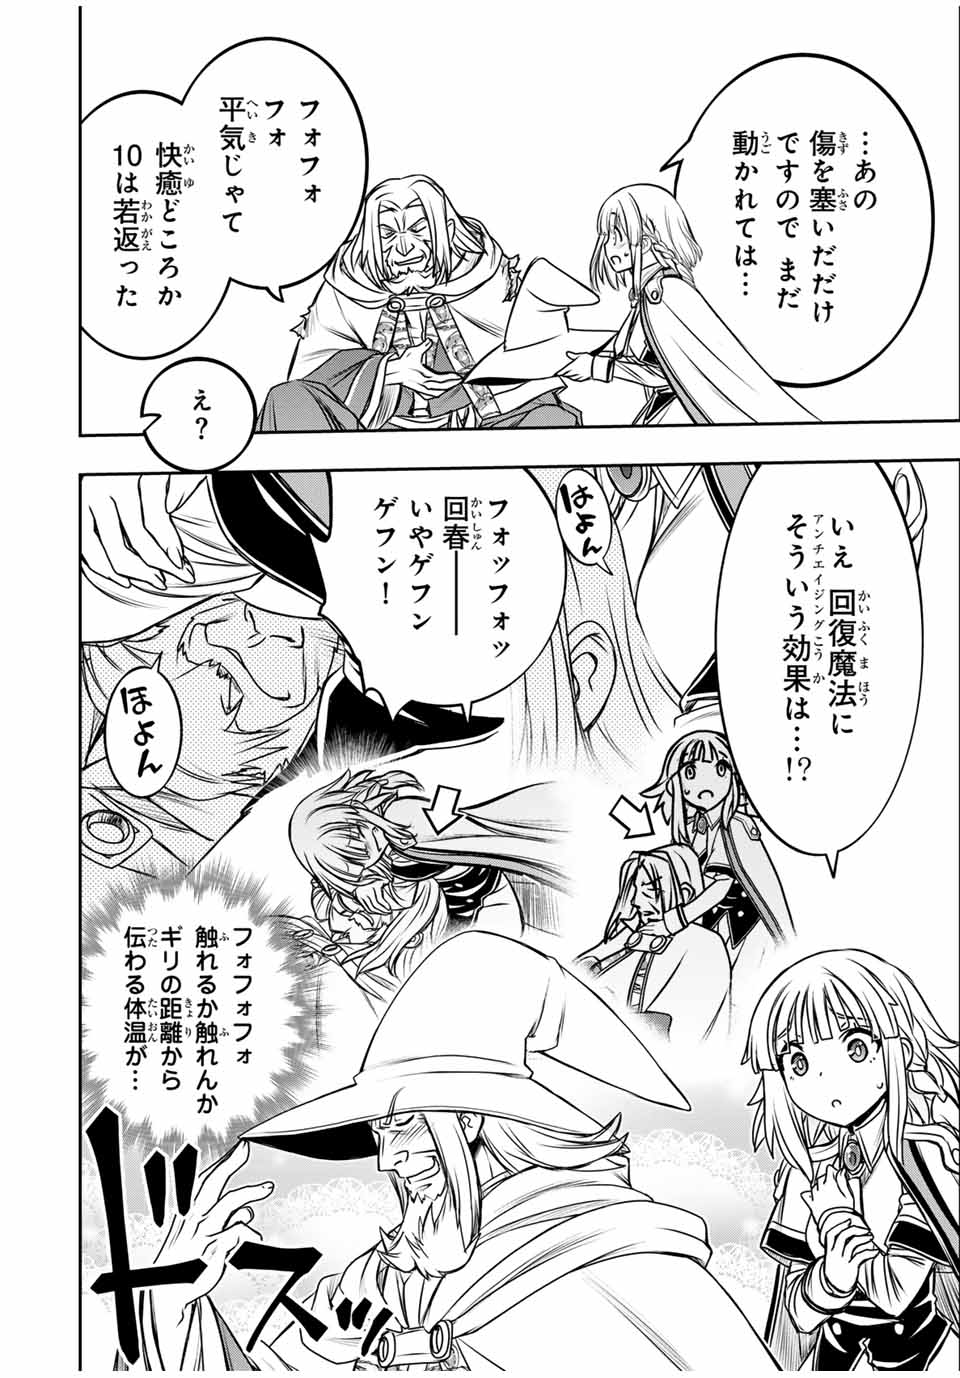 Nengan no Akuyaku Reijou (Last Boss) no Karada wo Teniiretazo!  - Chapter 26 - Page 6